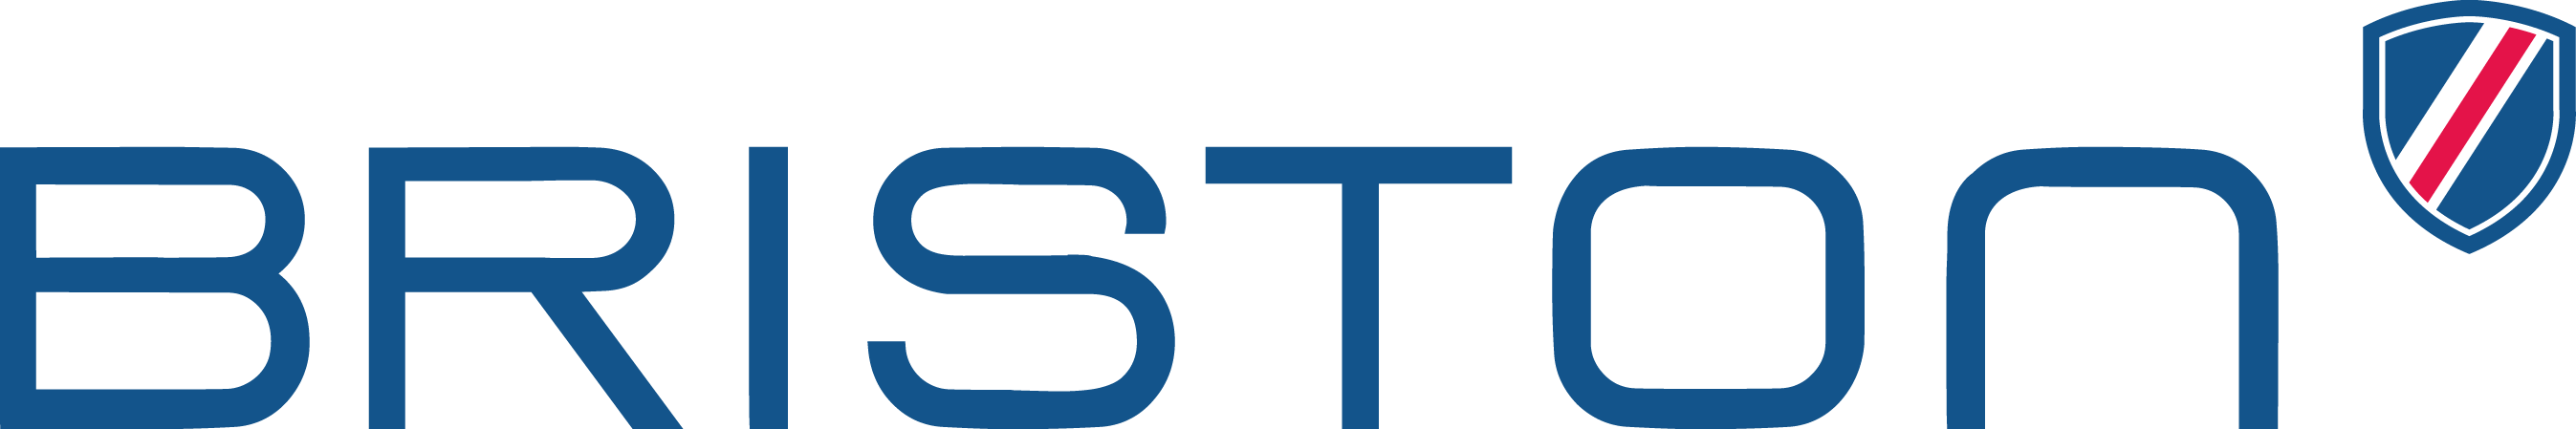 briston-logo.png